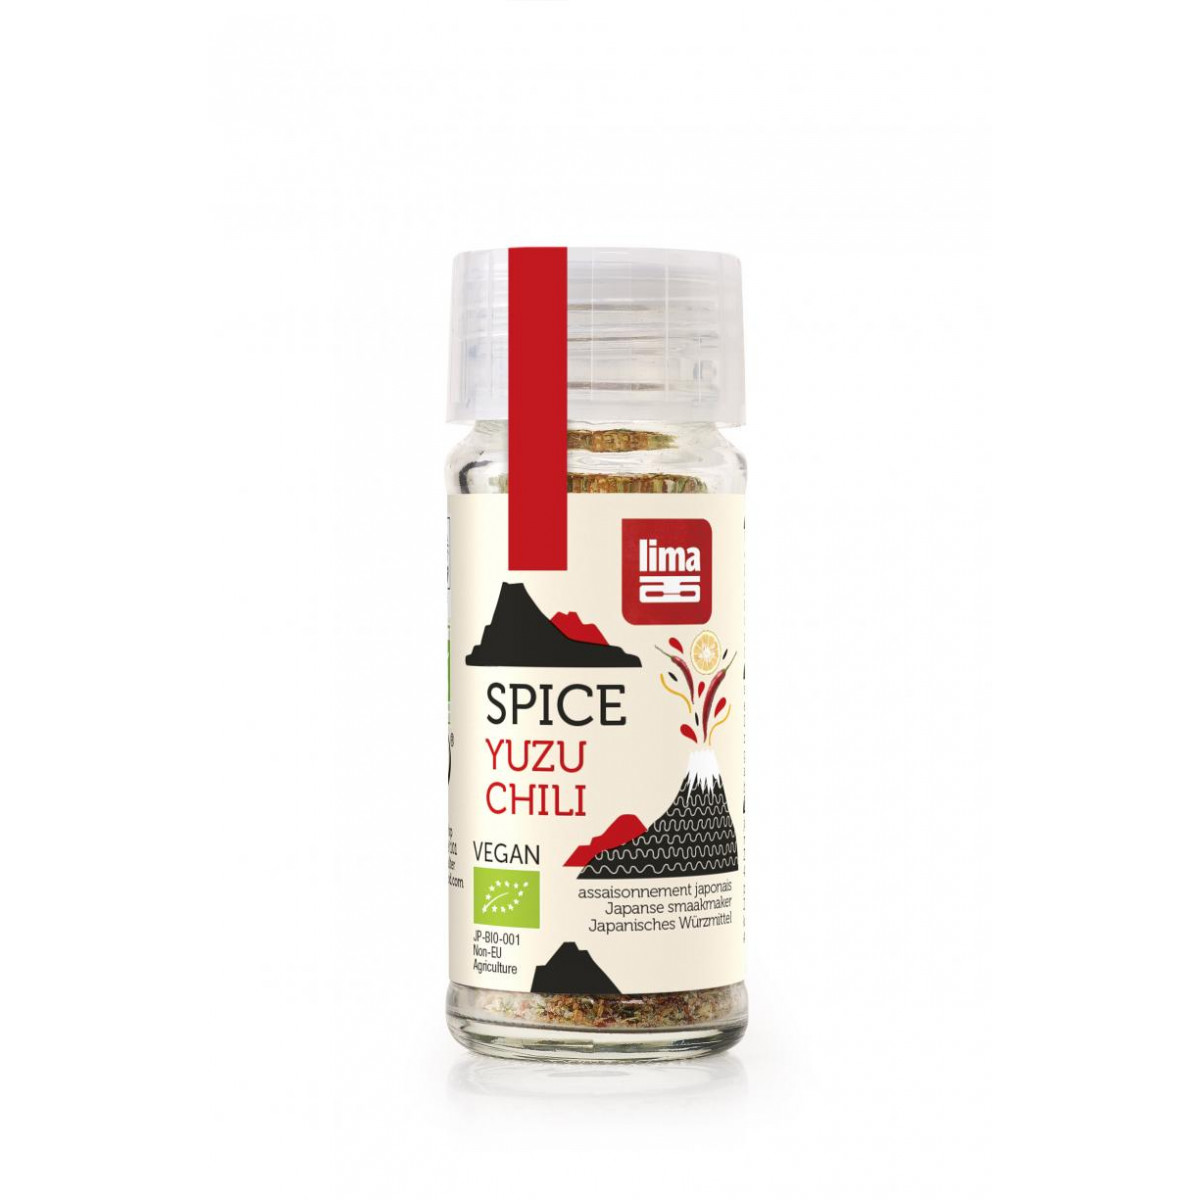 Spice Yuzu Chili